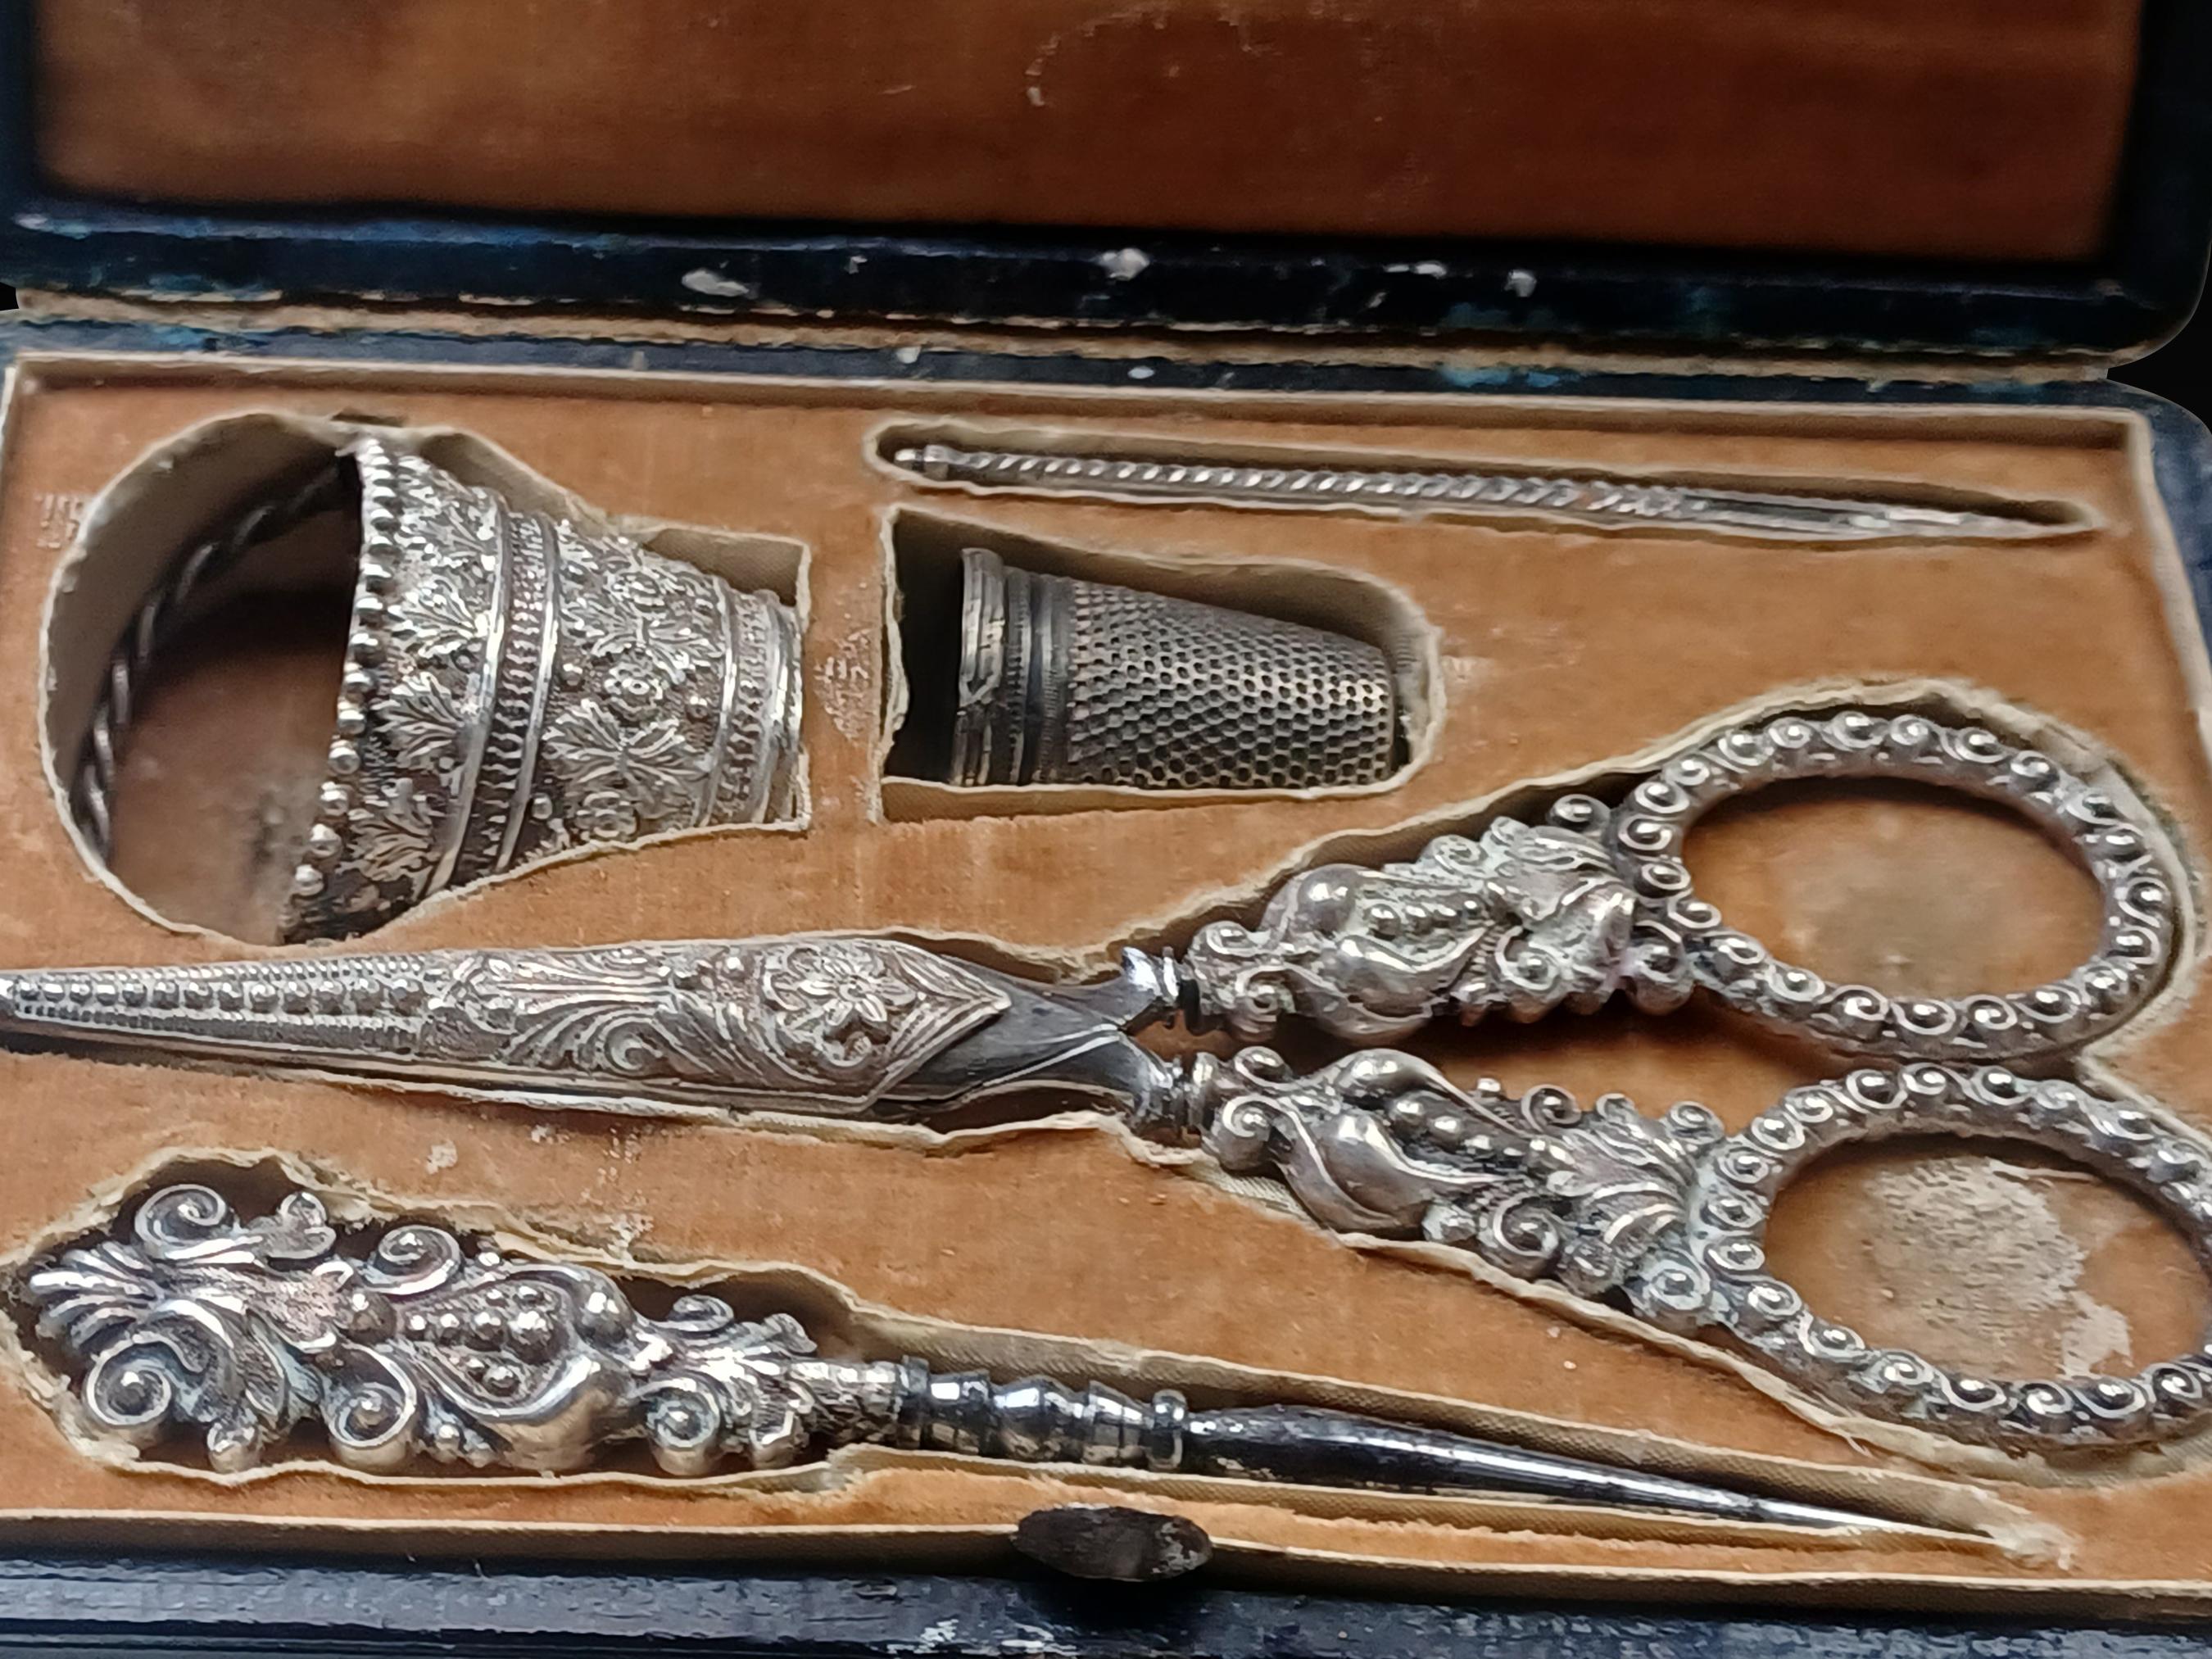 Rare Antique George IV Lady’s Sewing Necessaire with Original Case, est. 1825 For Sale 12